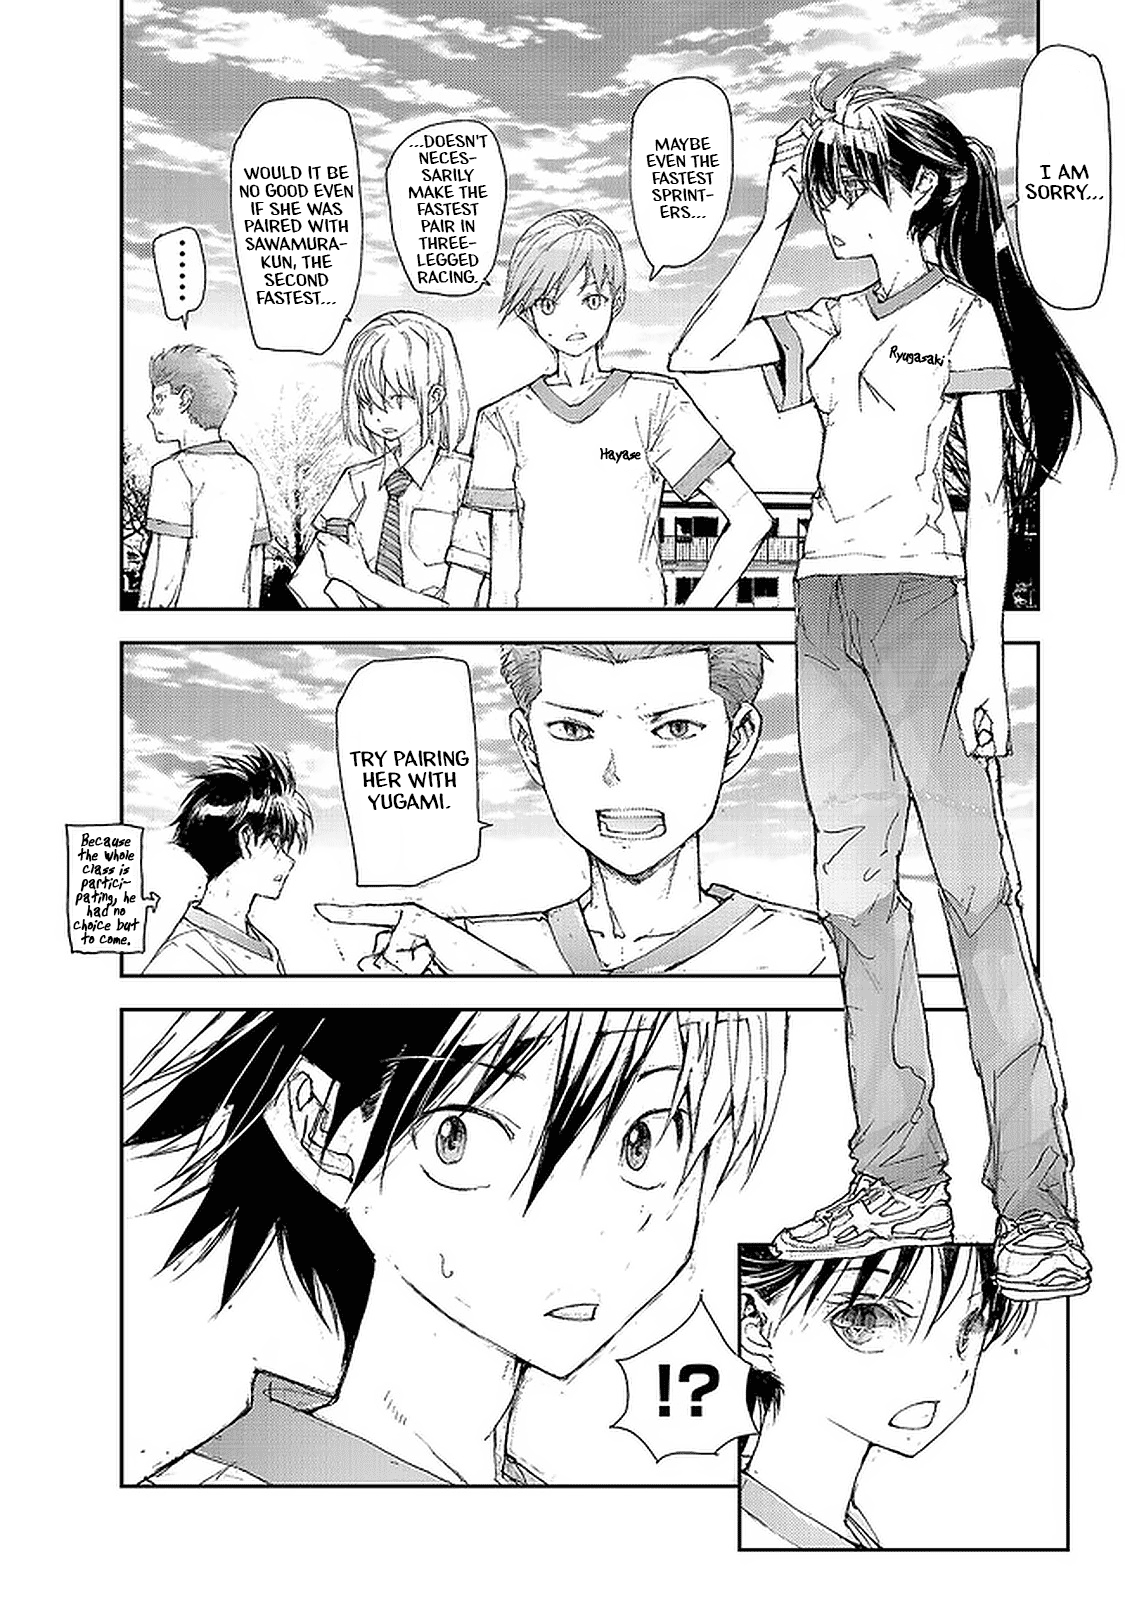 Shed! Ryugasaki-San - Page 2